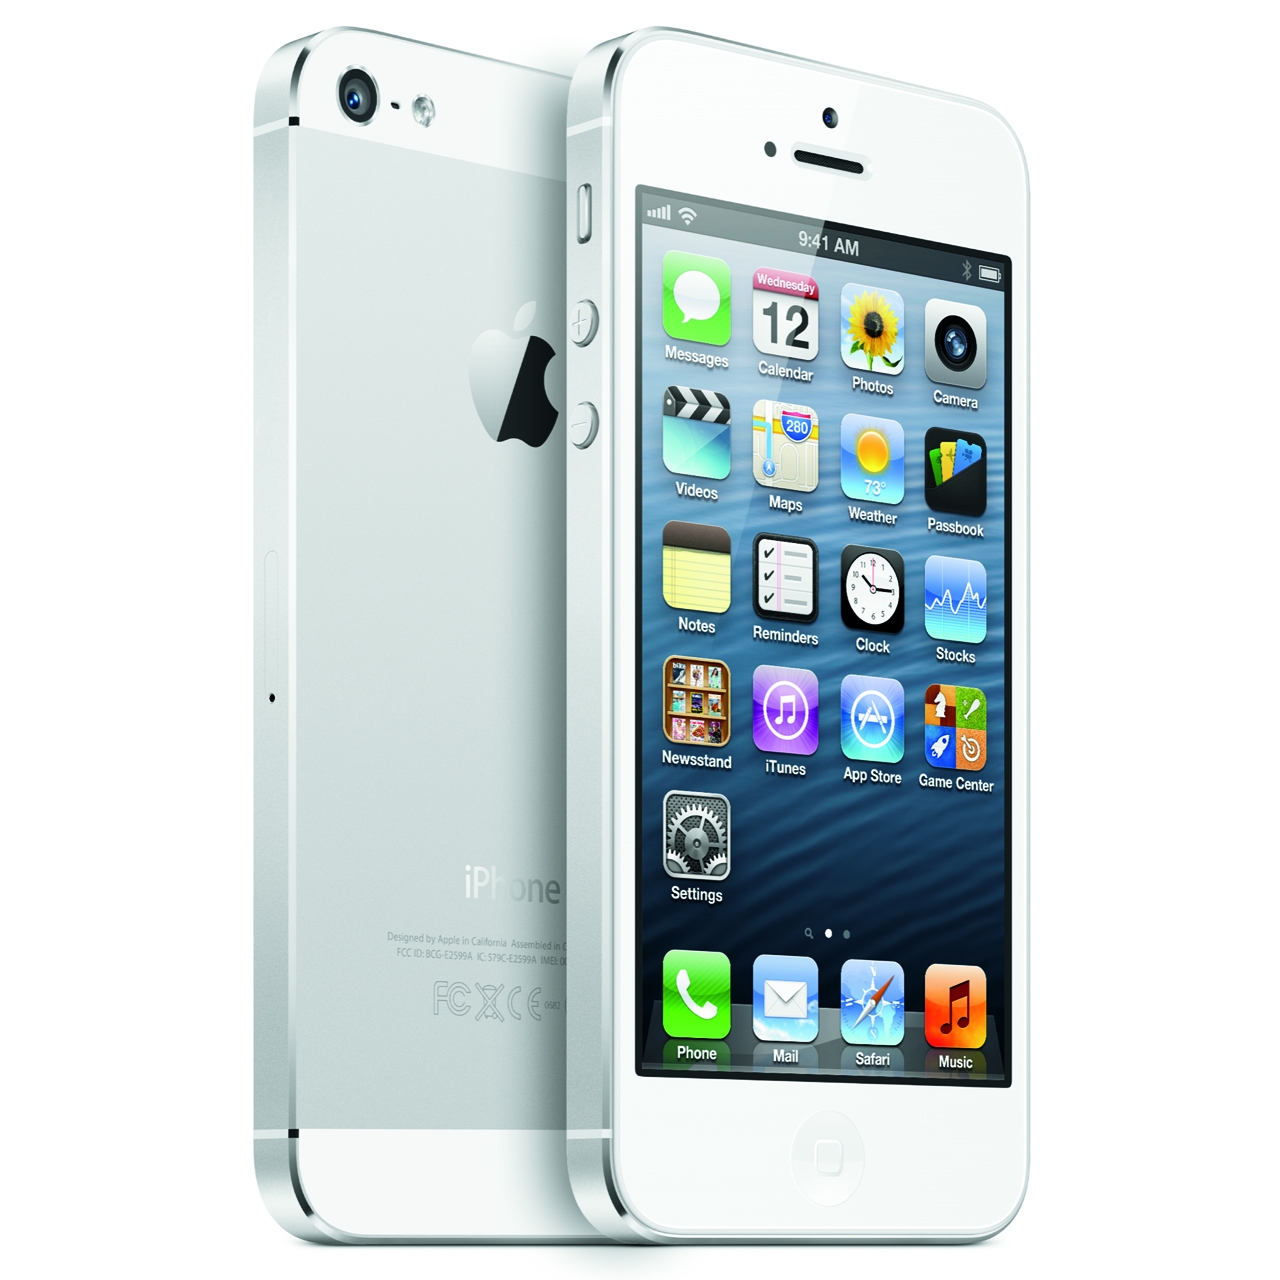 Apple iPhone 5 - 32GB - Black & Slate (Unlocked) A1428 (GSM) - Tested ...